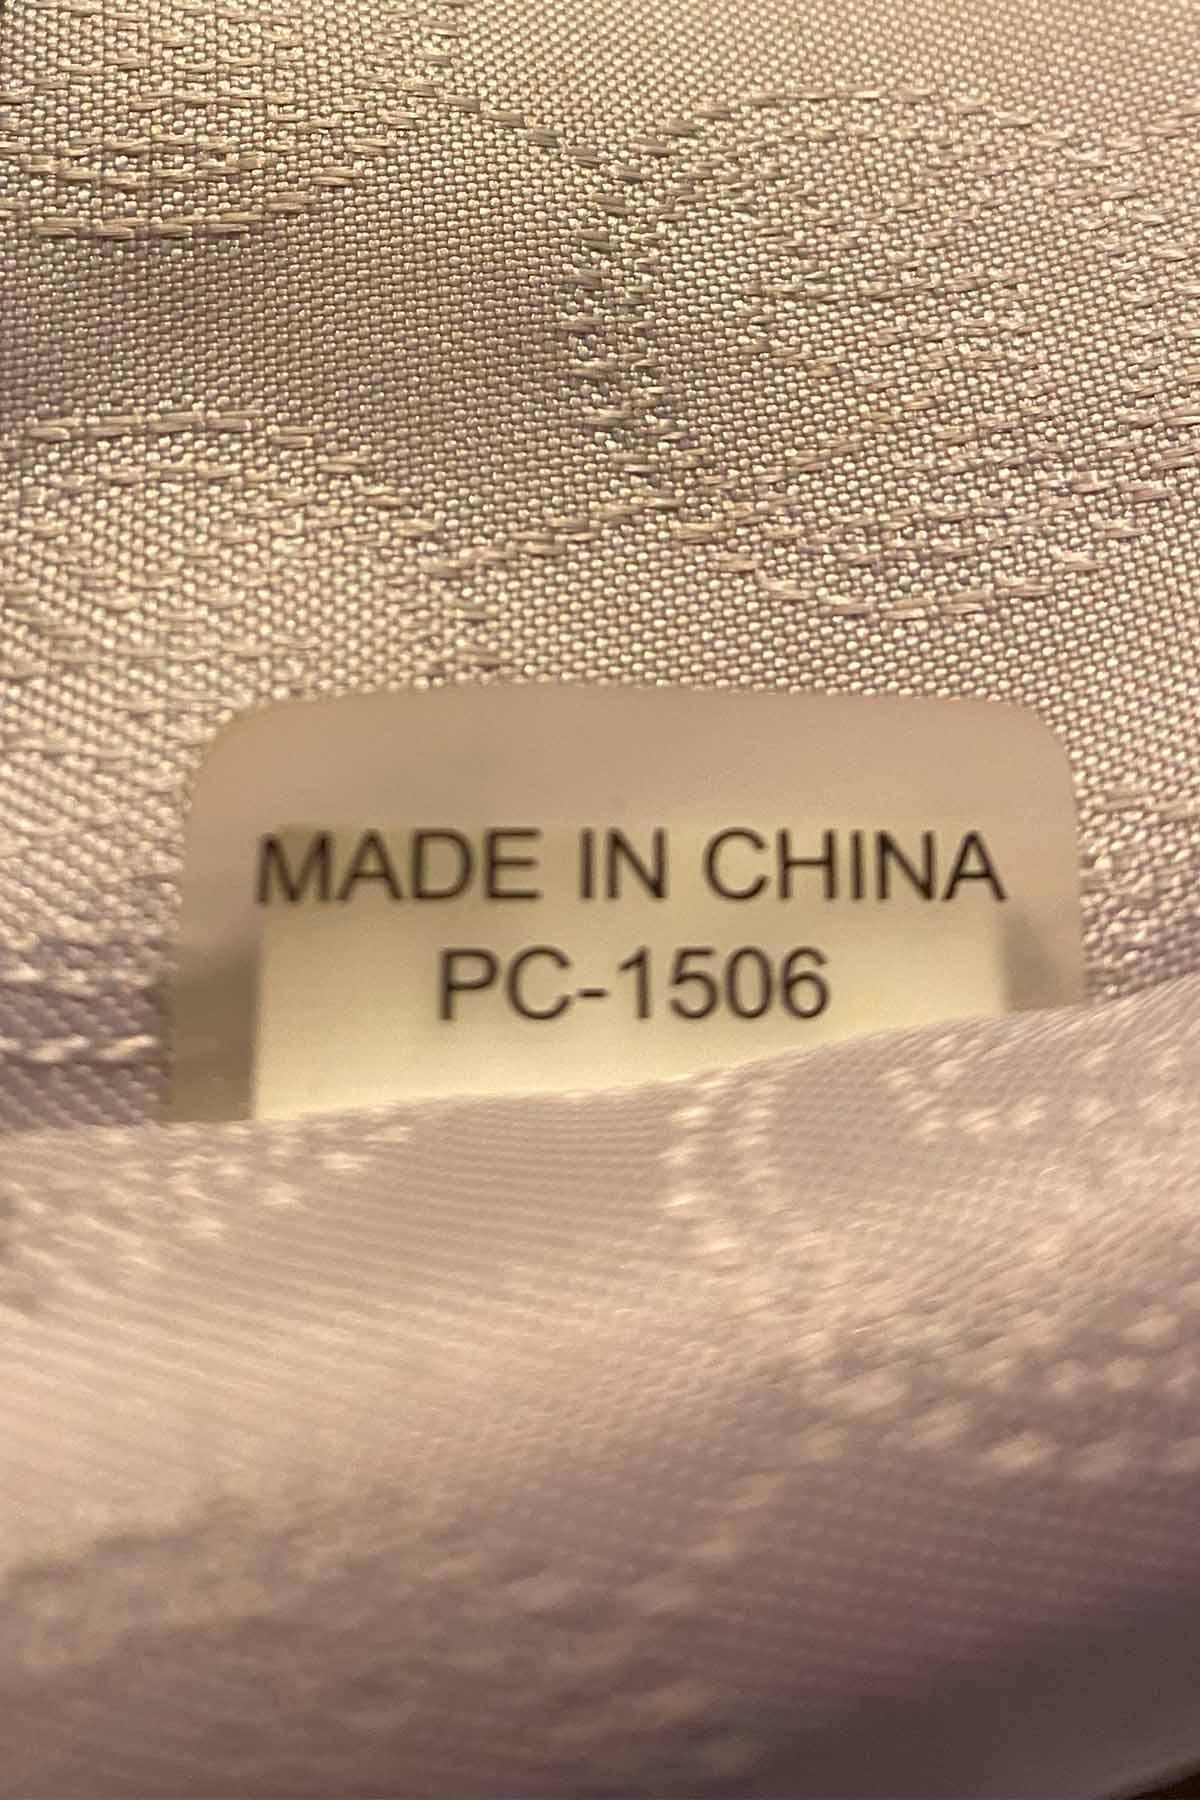 michael kors made in china tag.